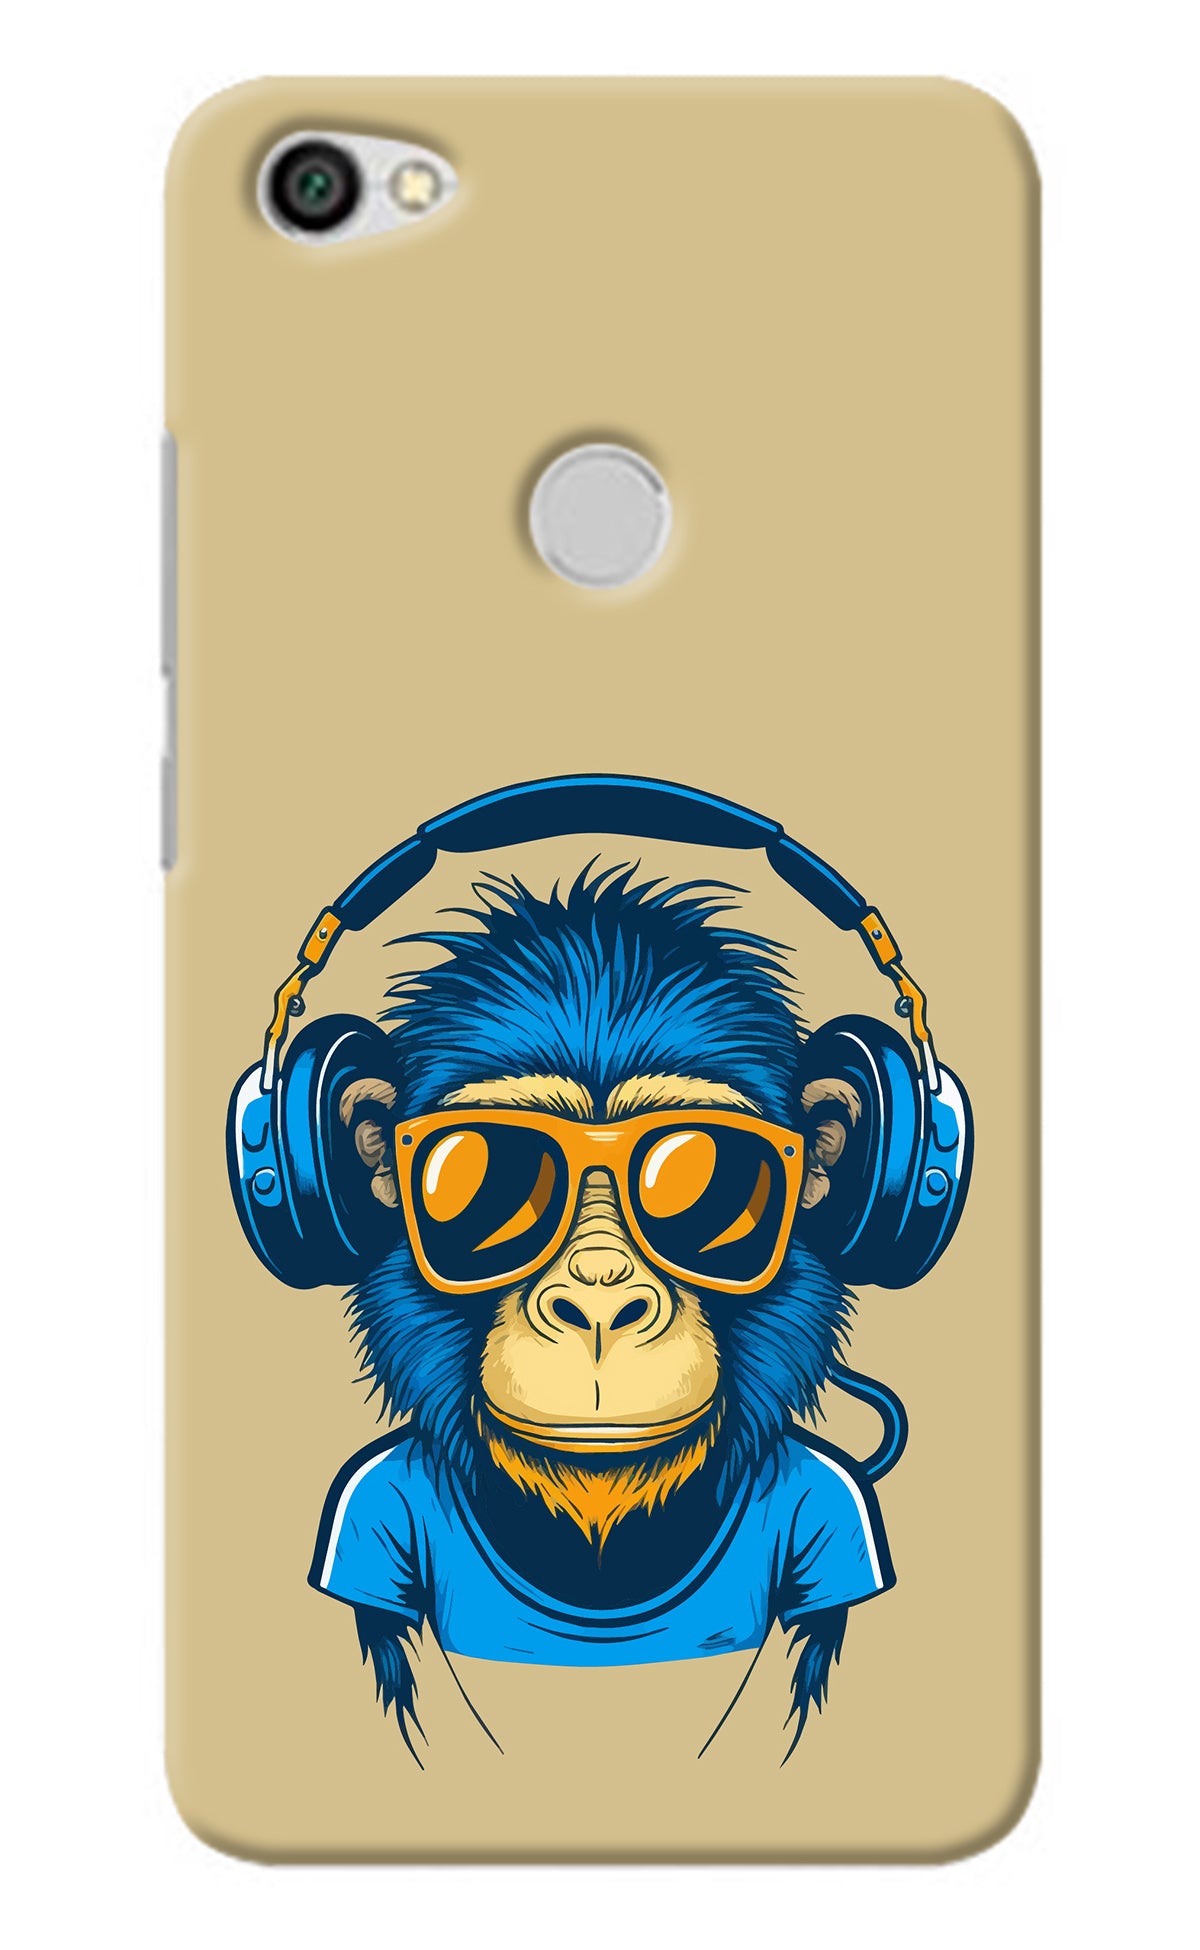 Monkey Headphone Redmi Y1 Back Cover